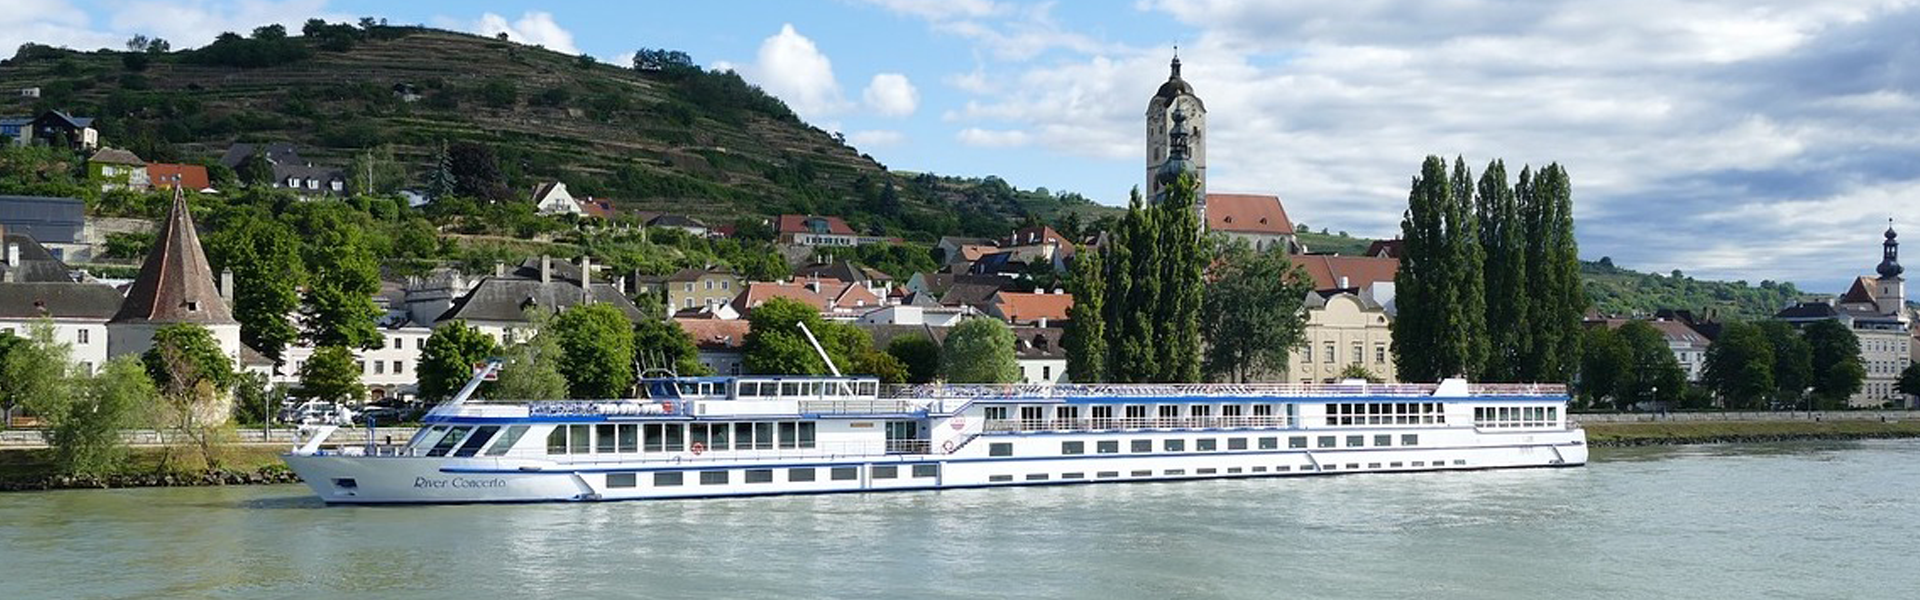 River Cruise Deals